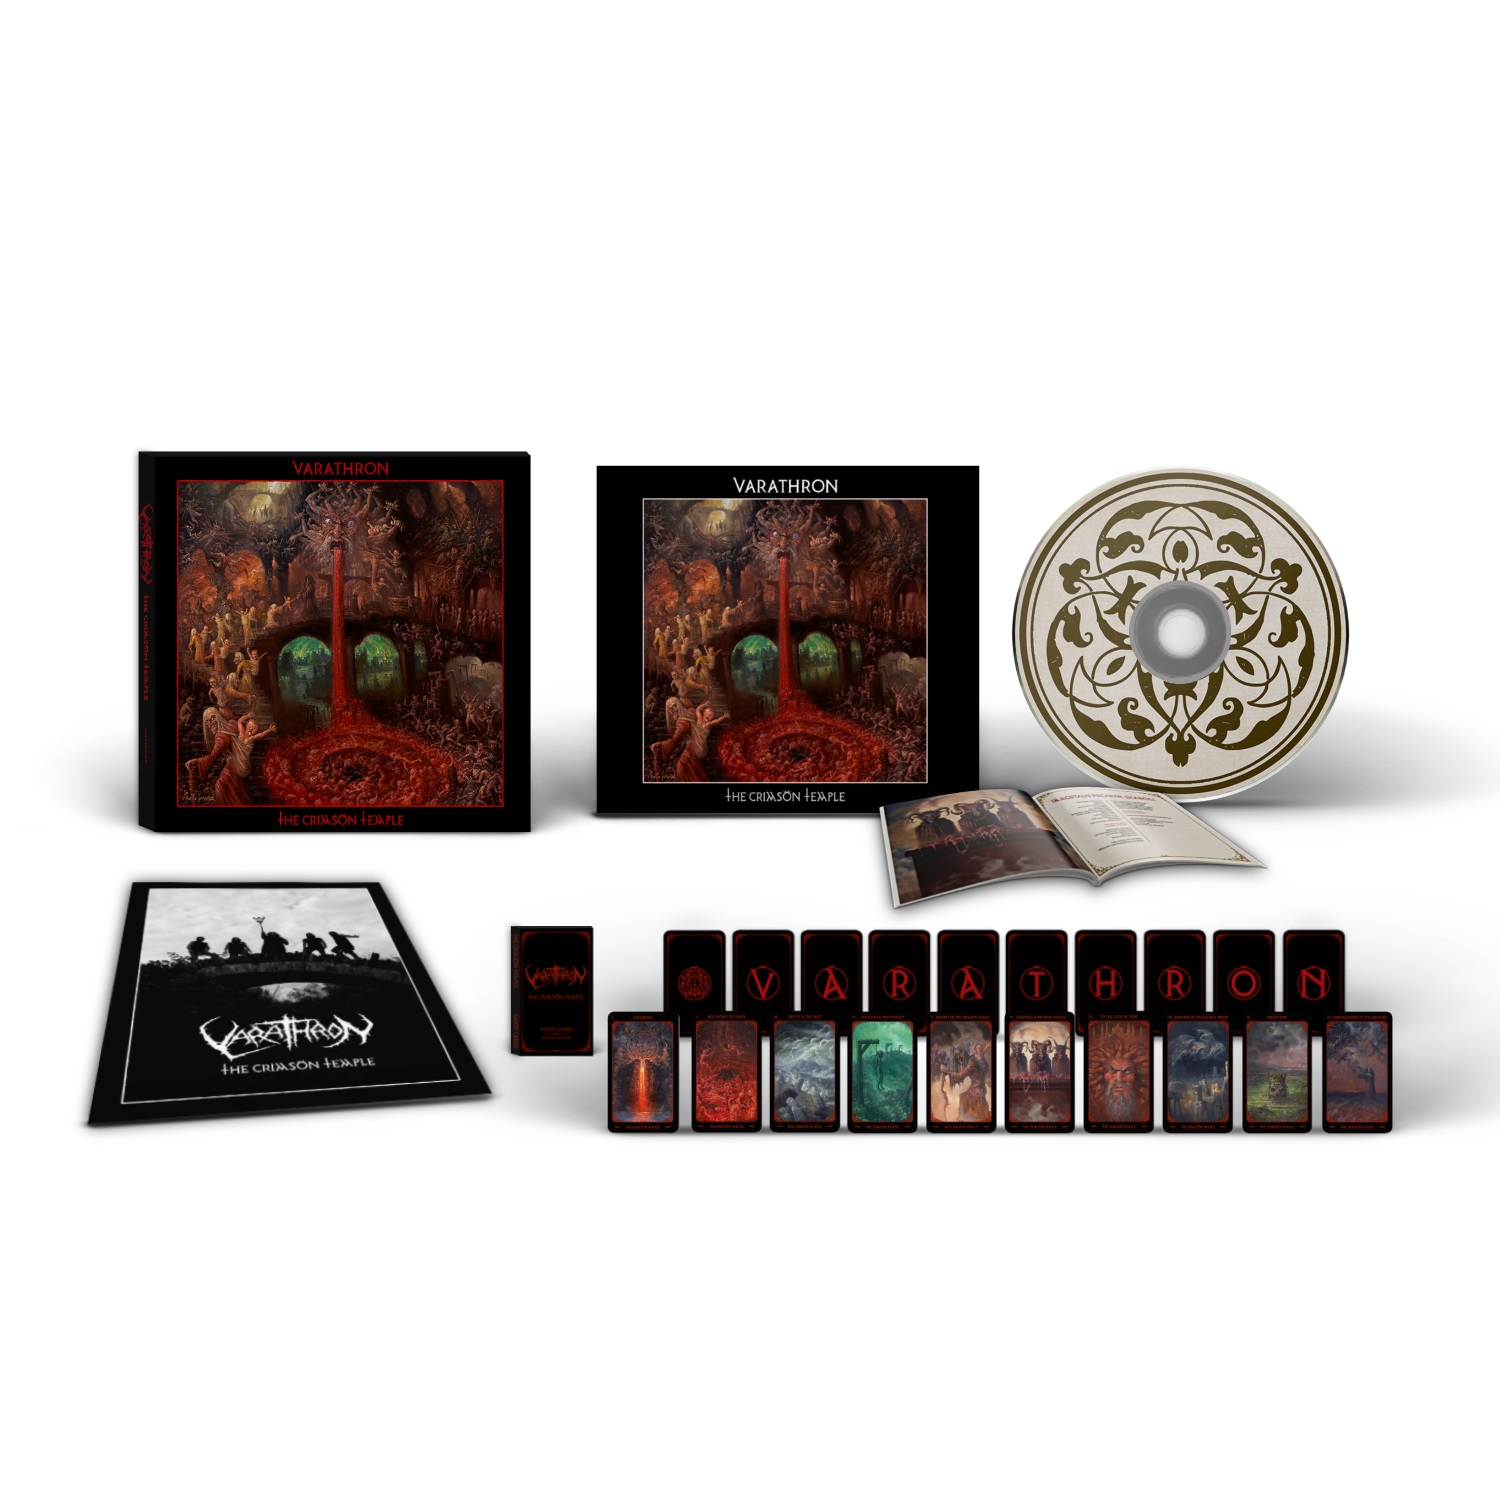 Varathron - The Crimson Temple Ltd Ed. CD Box Set.